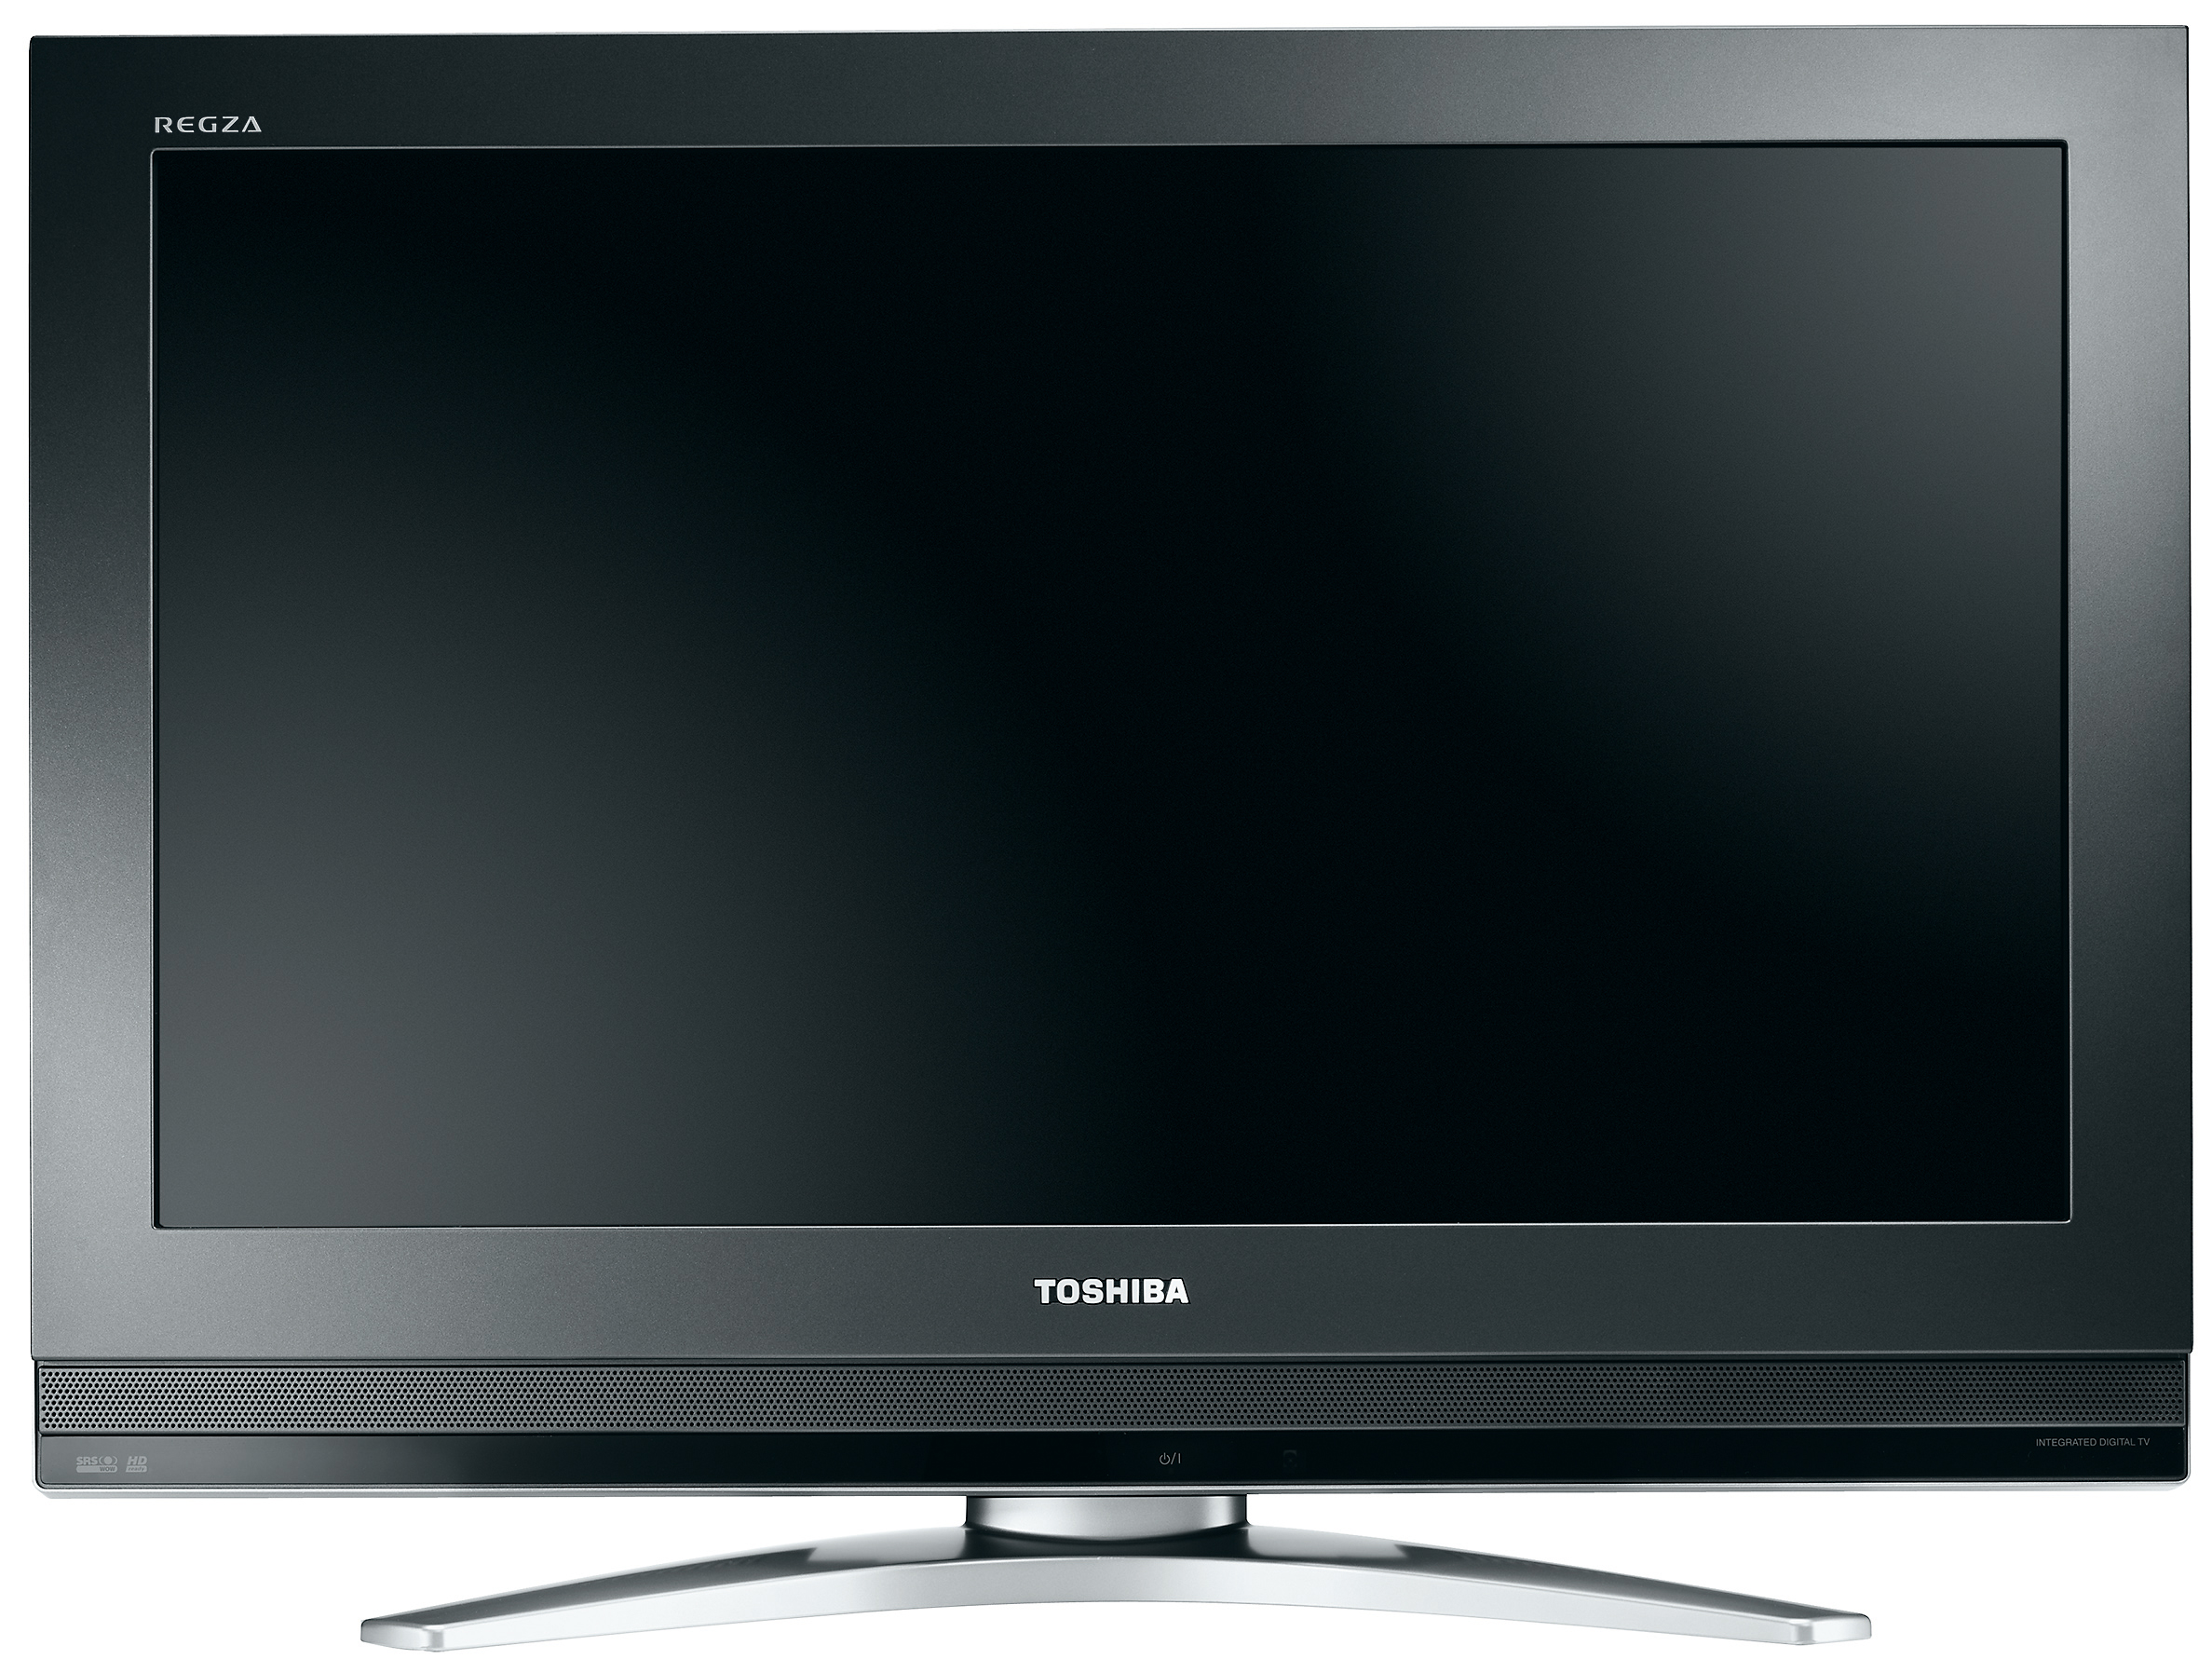 Toshiba drops four new LCD TVs | TechRadar